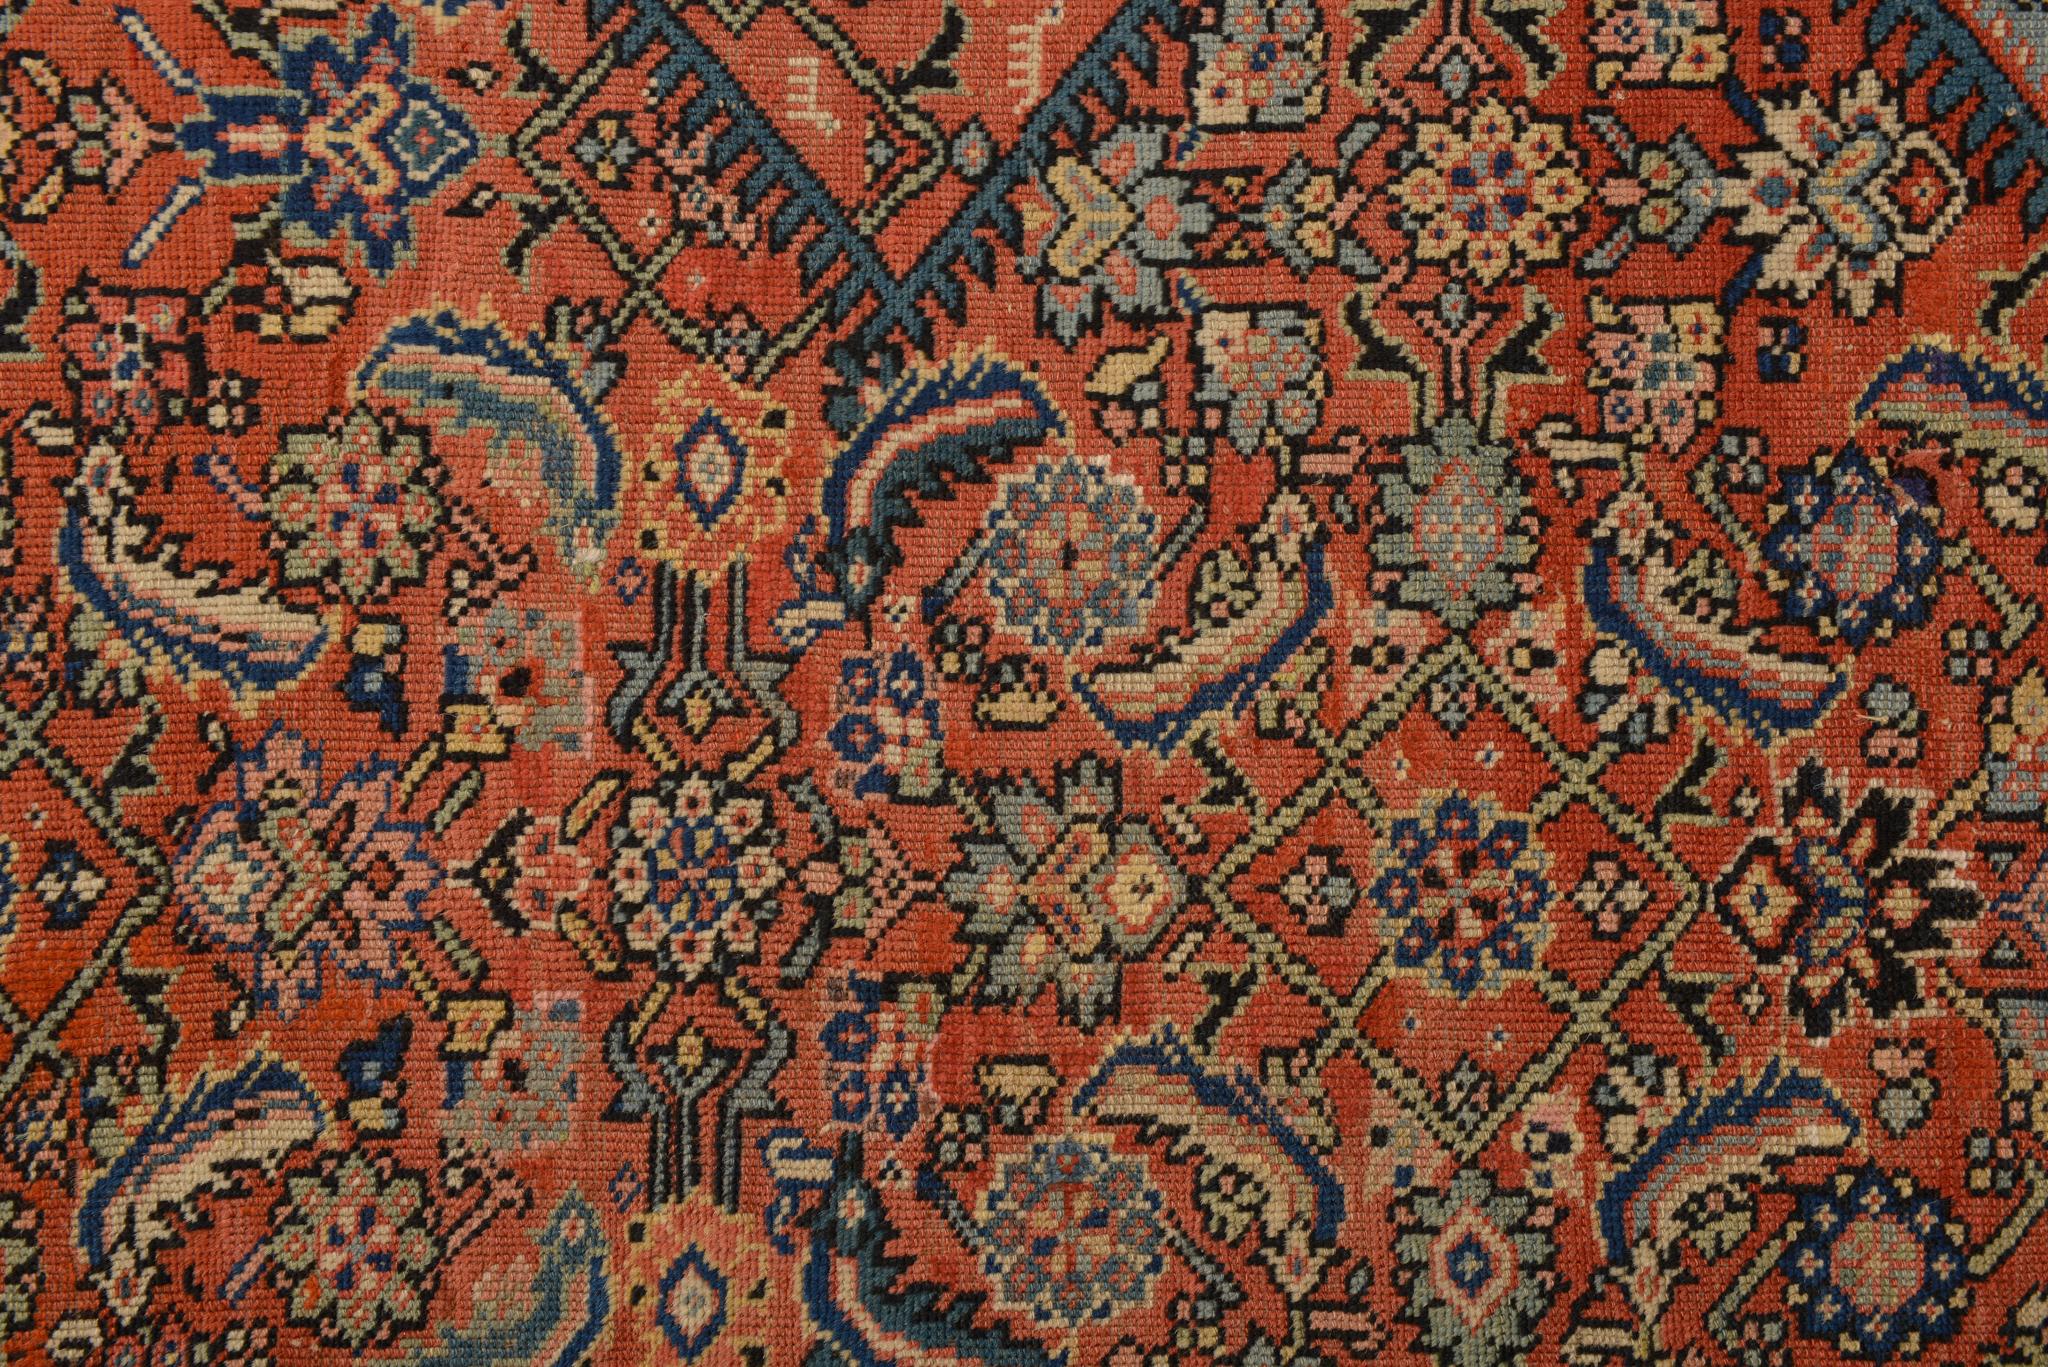 Hand-Knotted Antique Karabagh Carpet, Dated 1875 For Sale